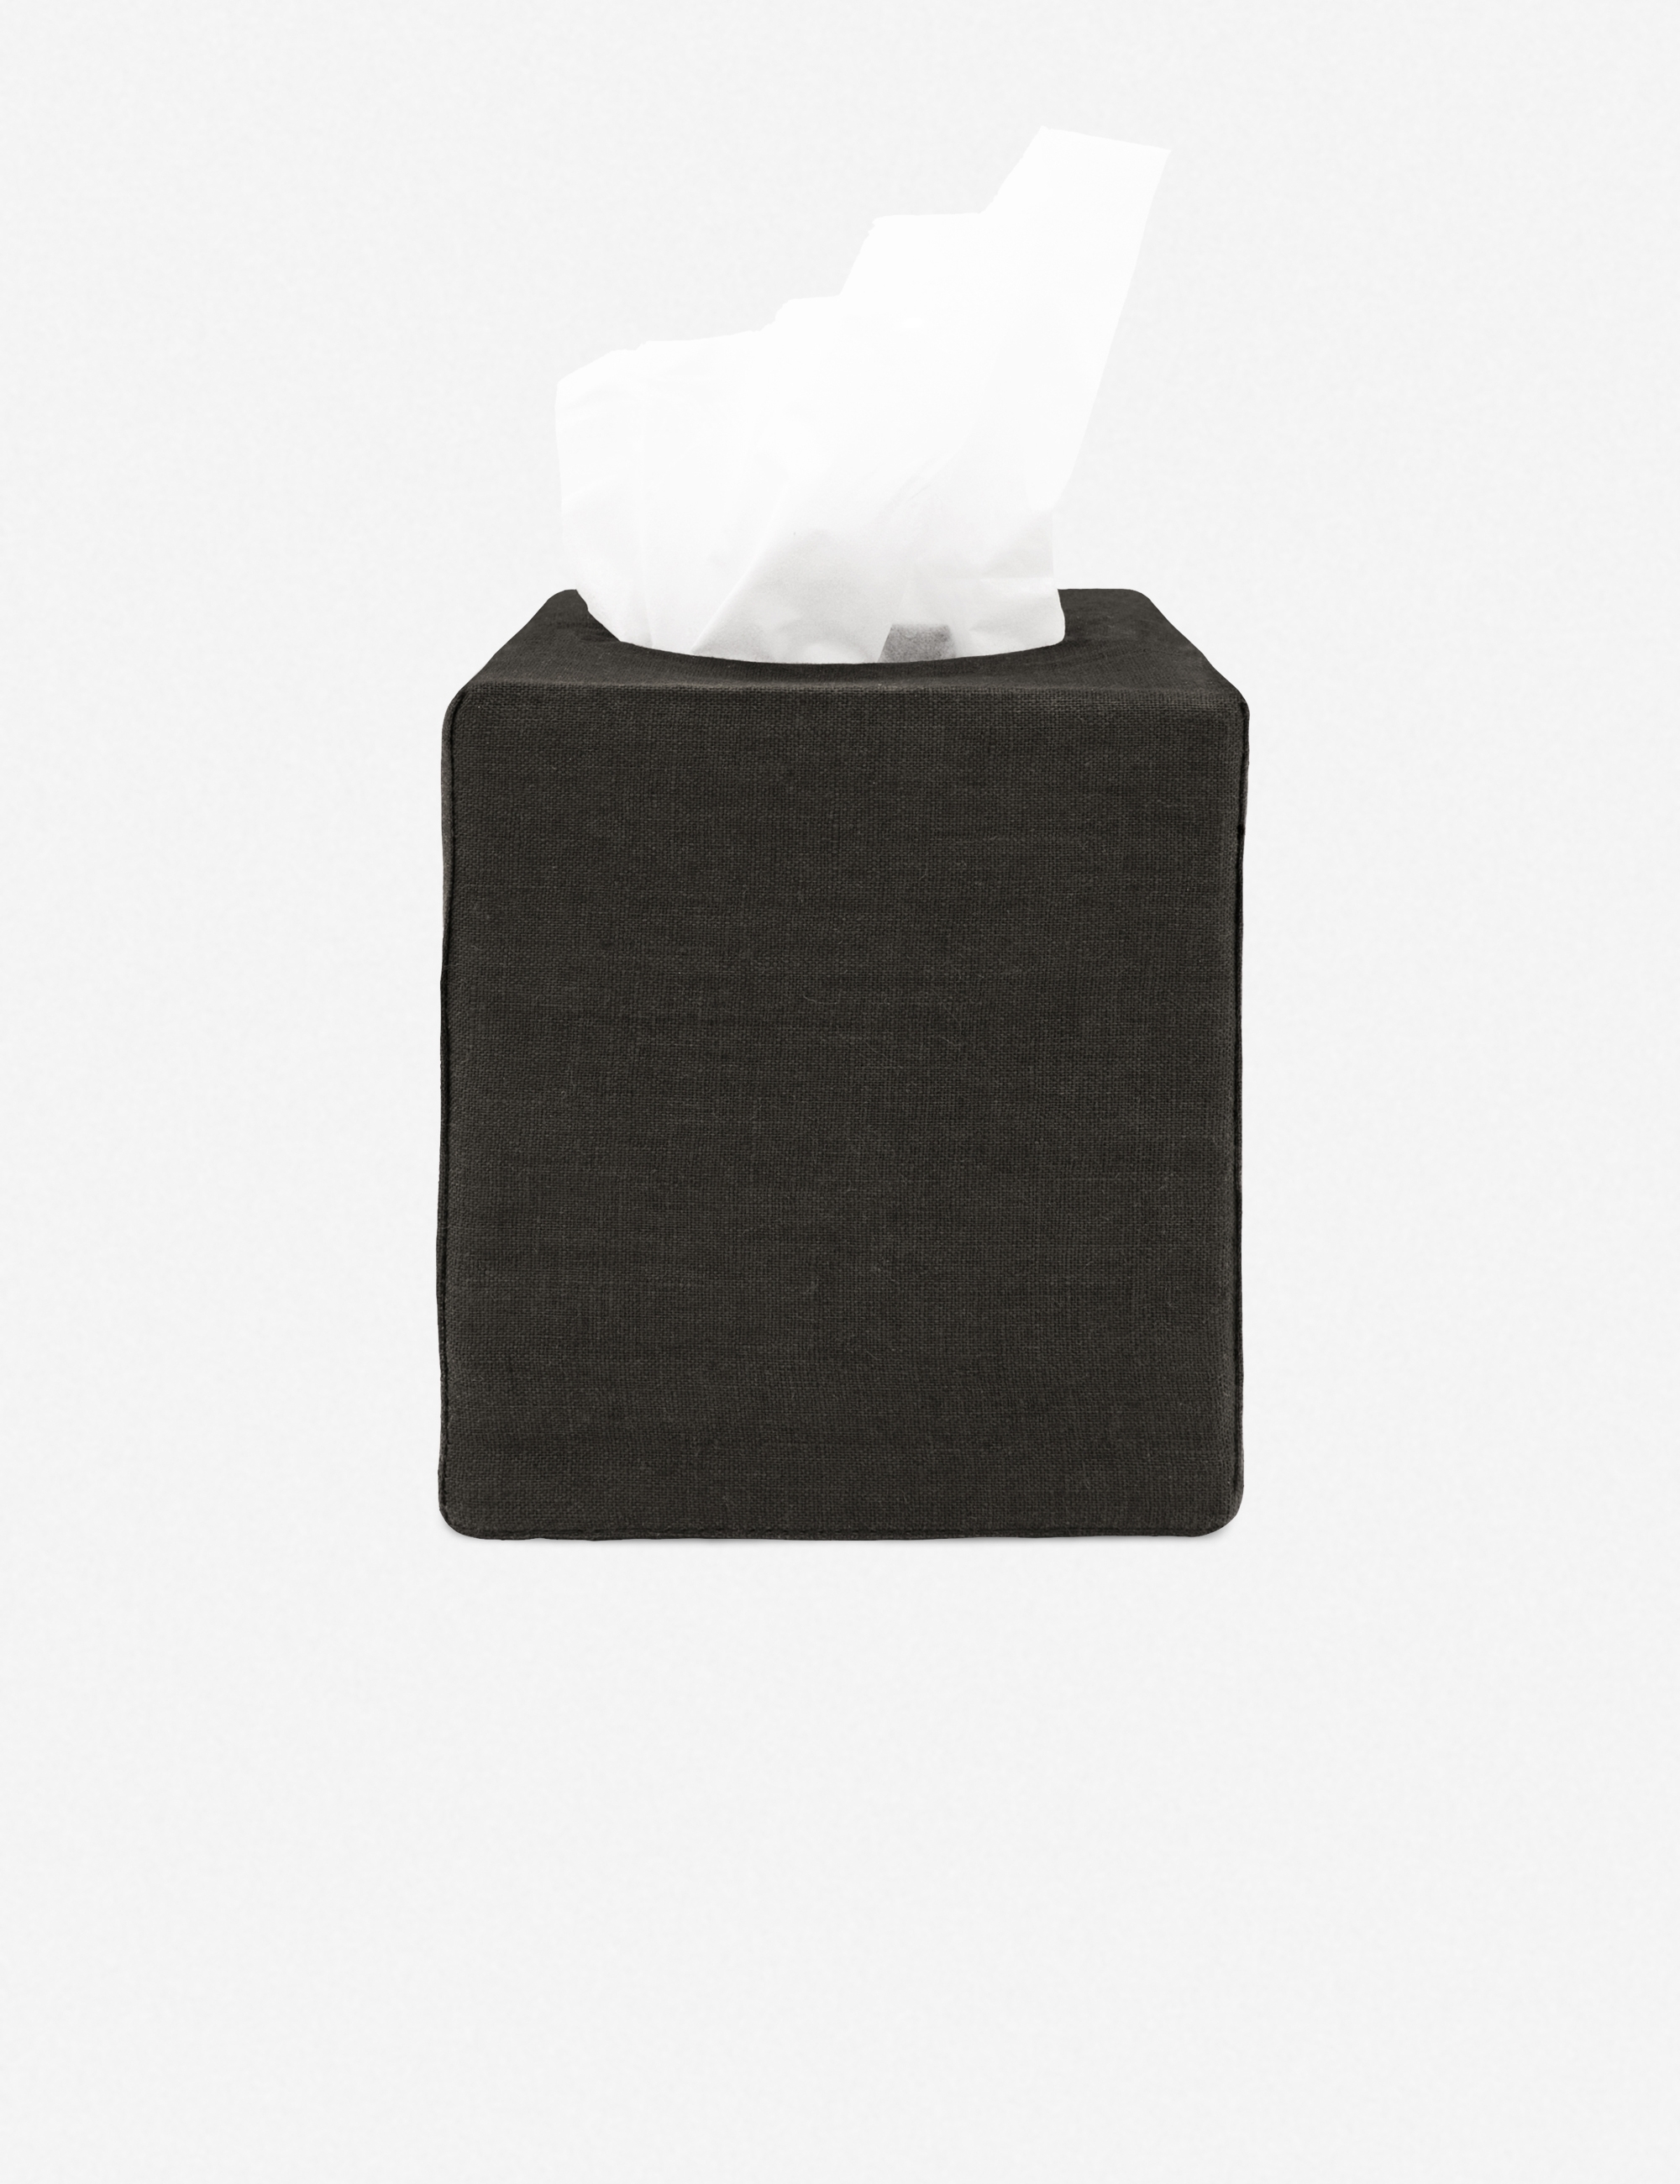 Tyla Tissue Box Cover, Bark - Image 1